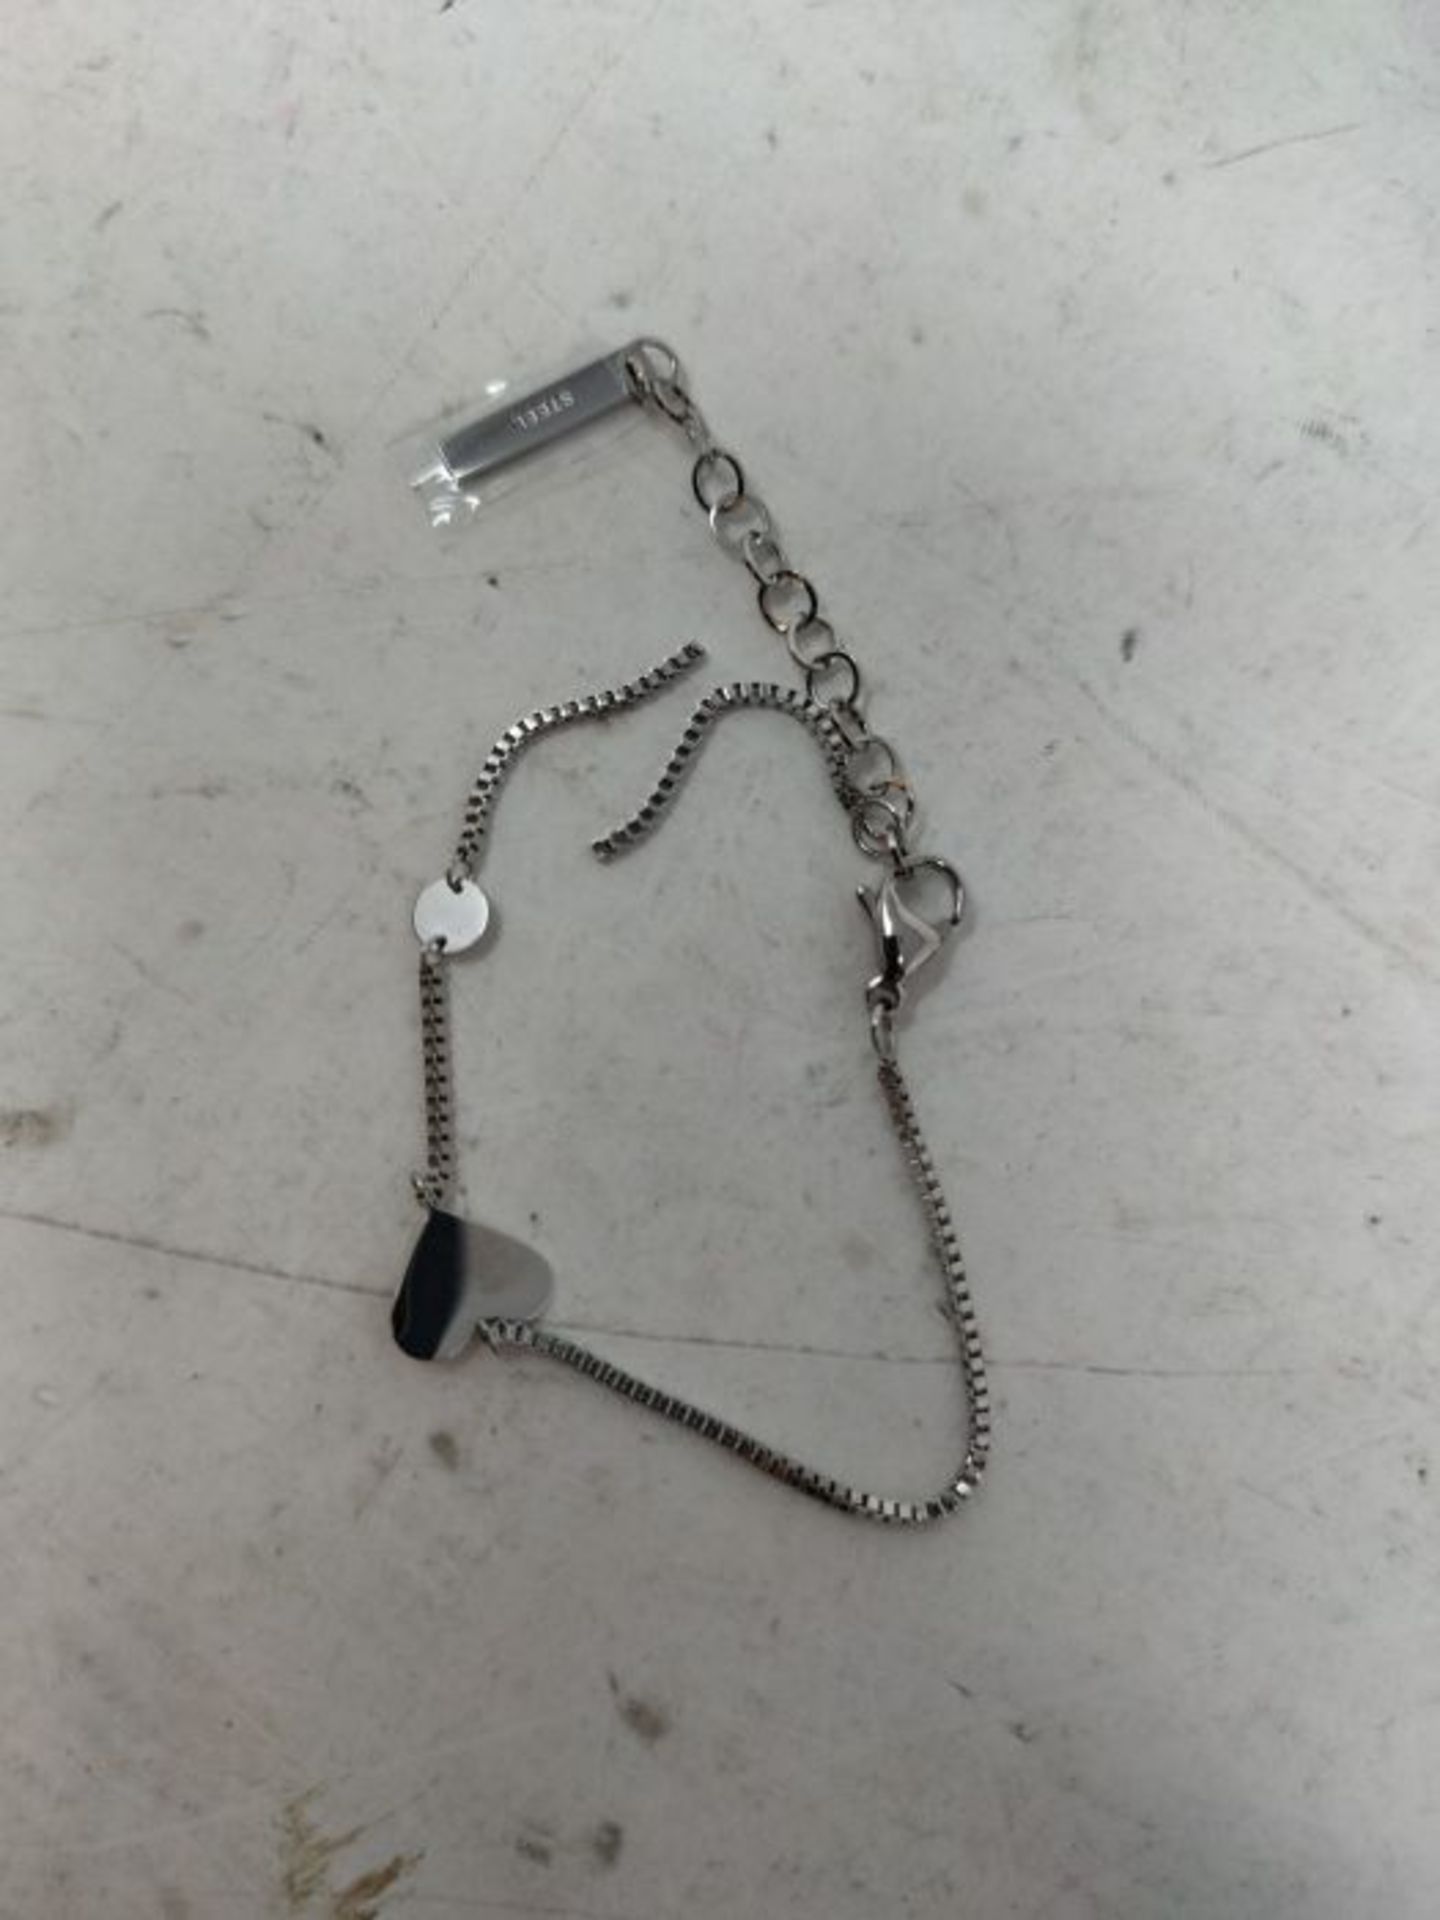 Liebeskind Berlin Bracelet, 20 cm, Stainless Steel, No gemstone., - Image 3 of 3